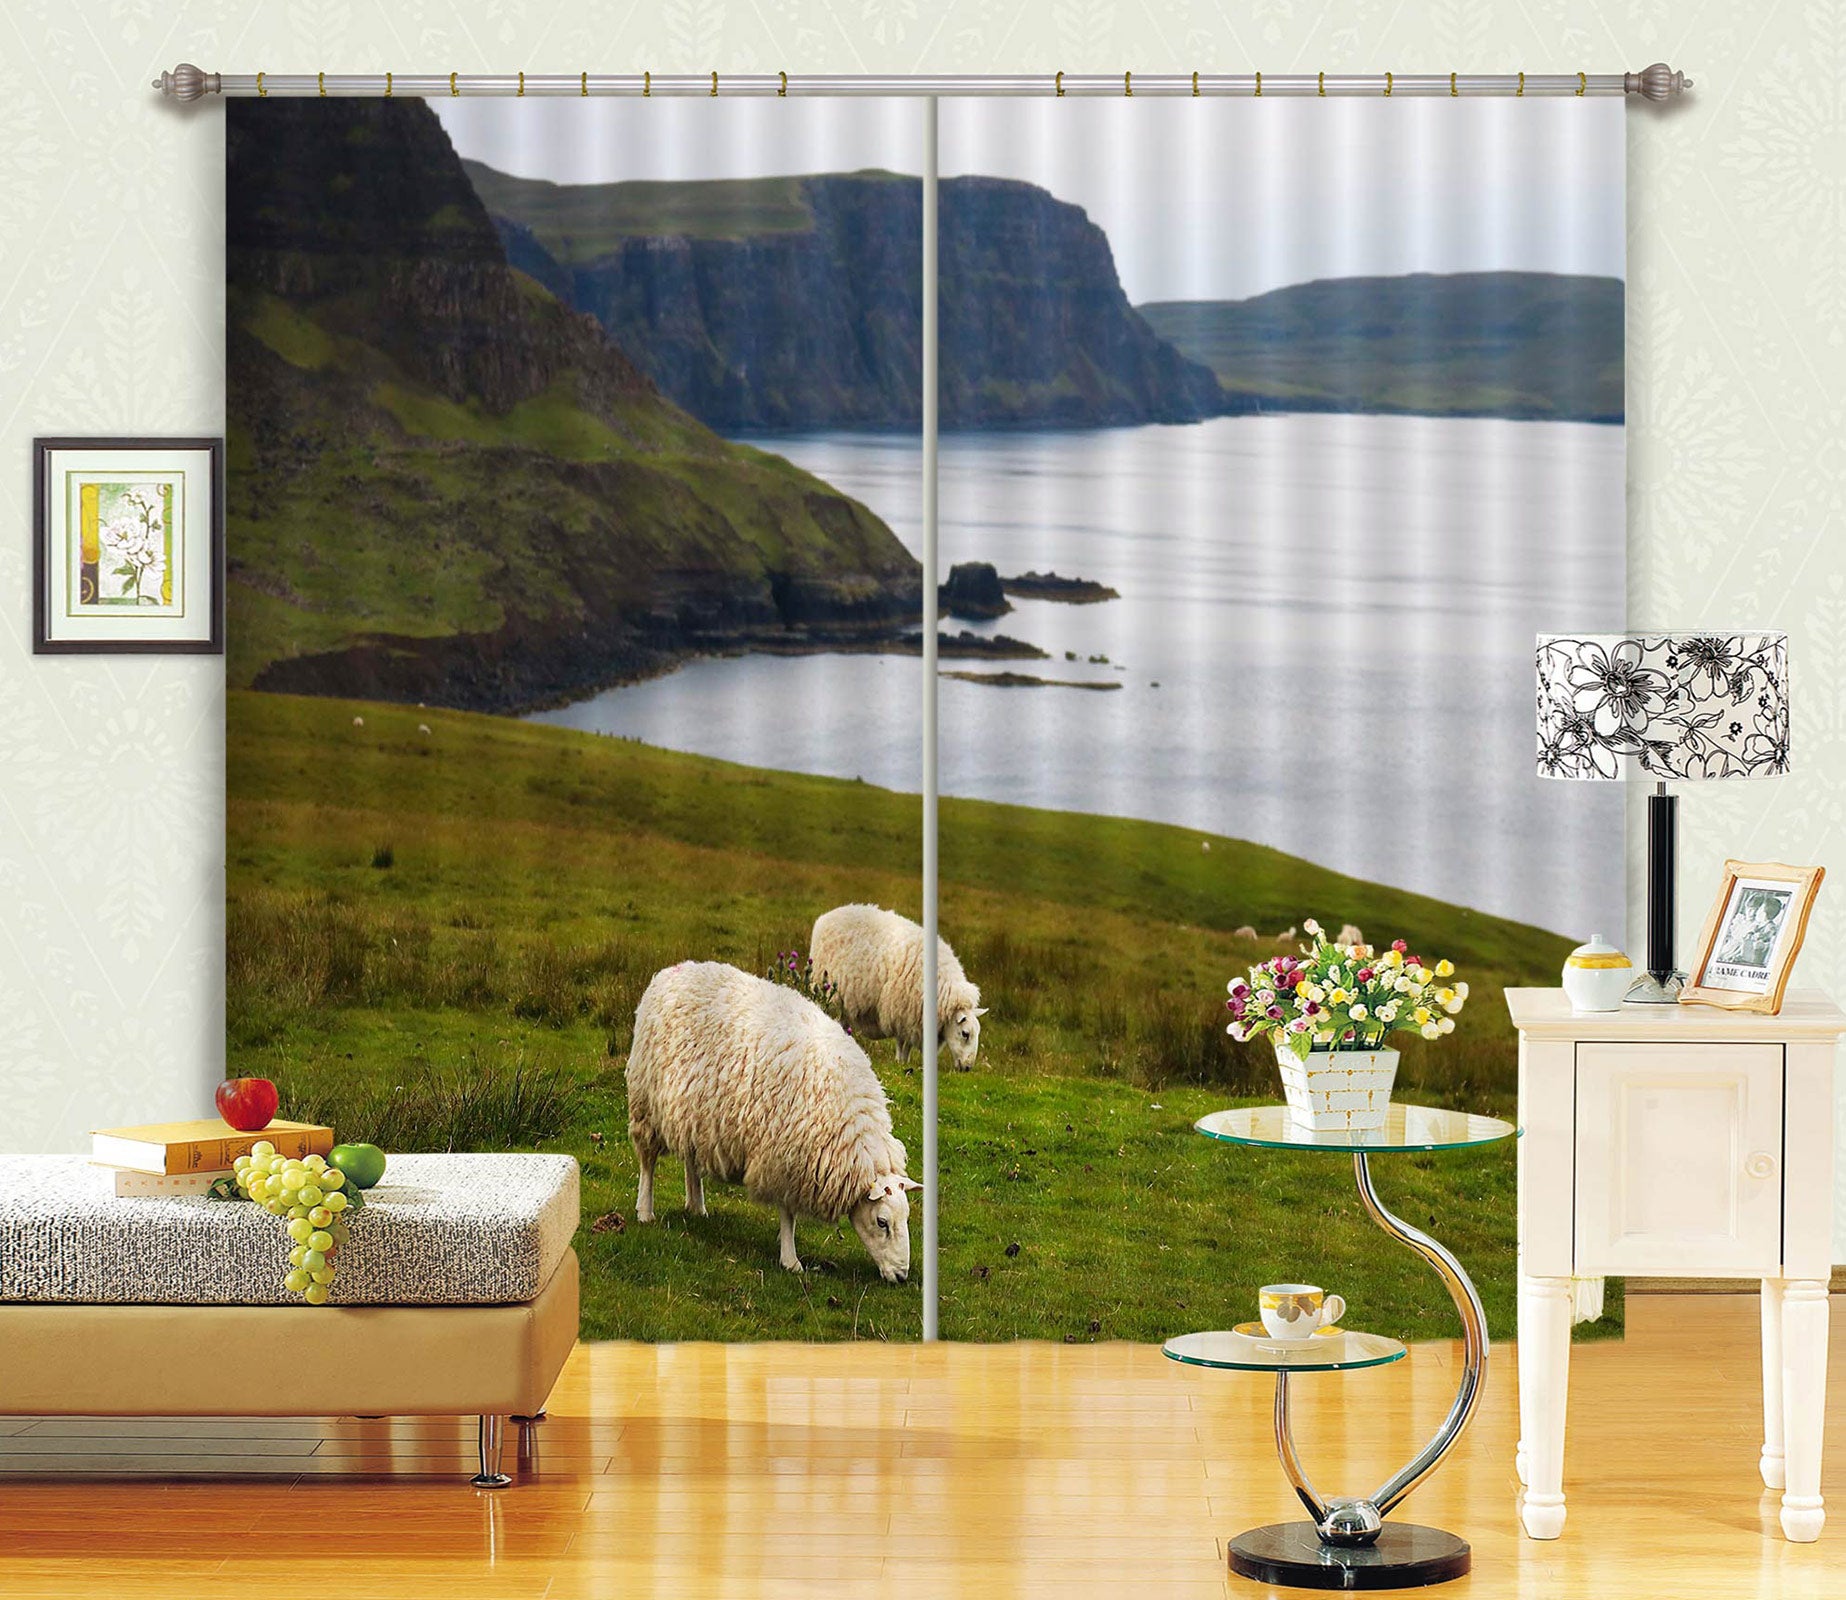 3D Scottish Sheep 021 Jerry LoFaro Curtain Curtains Drapes